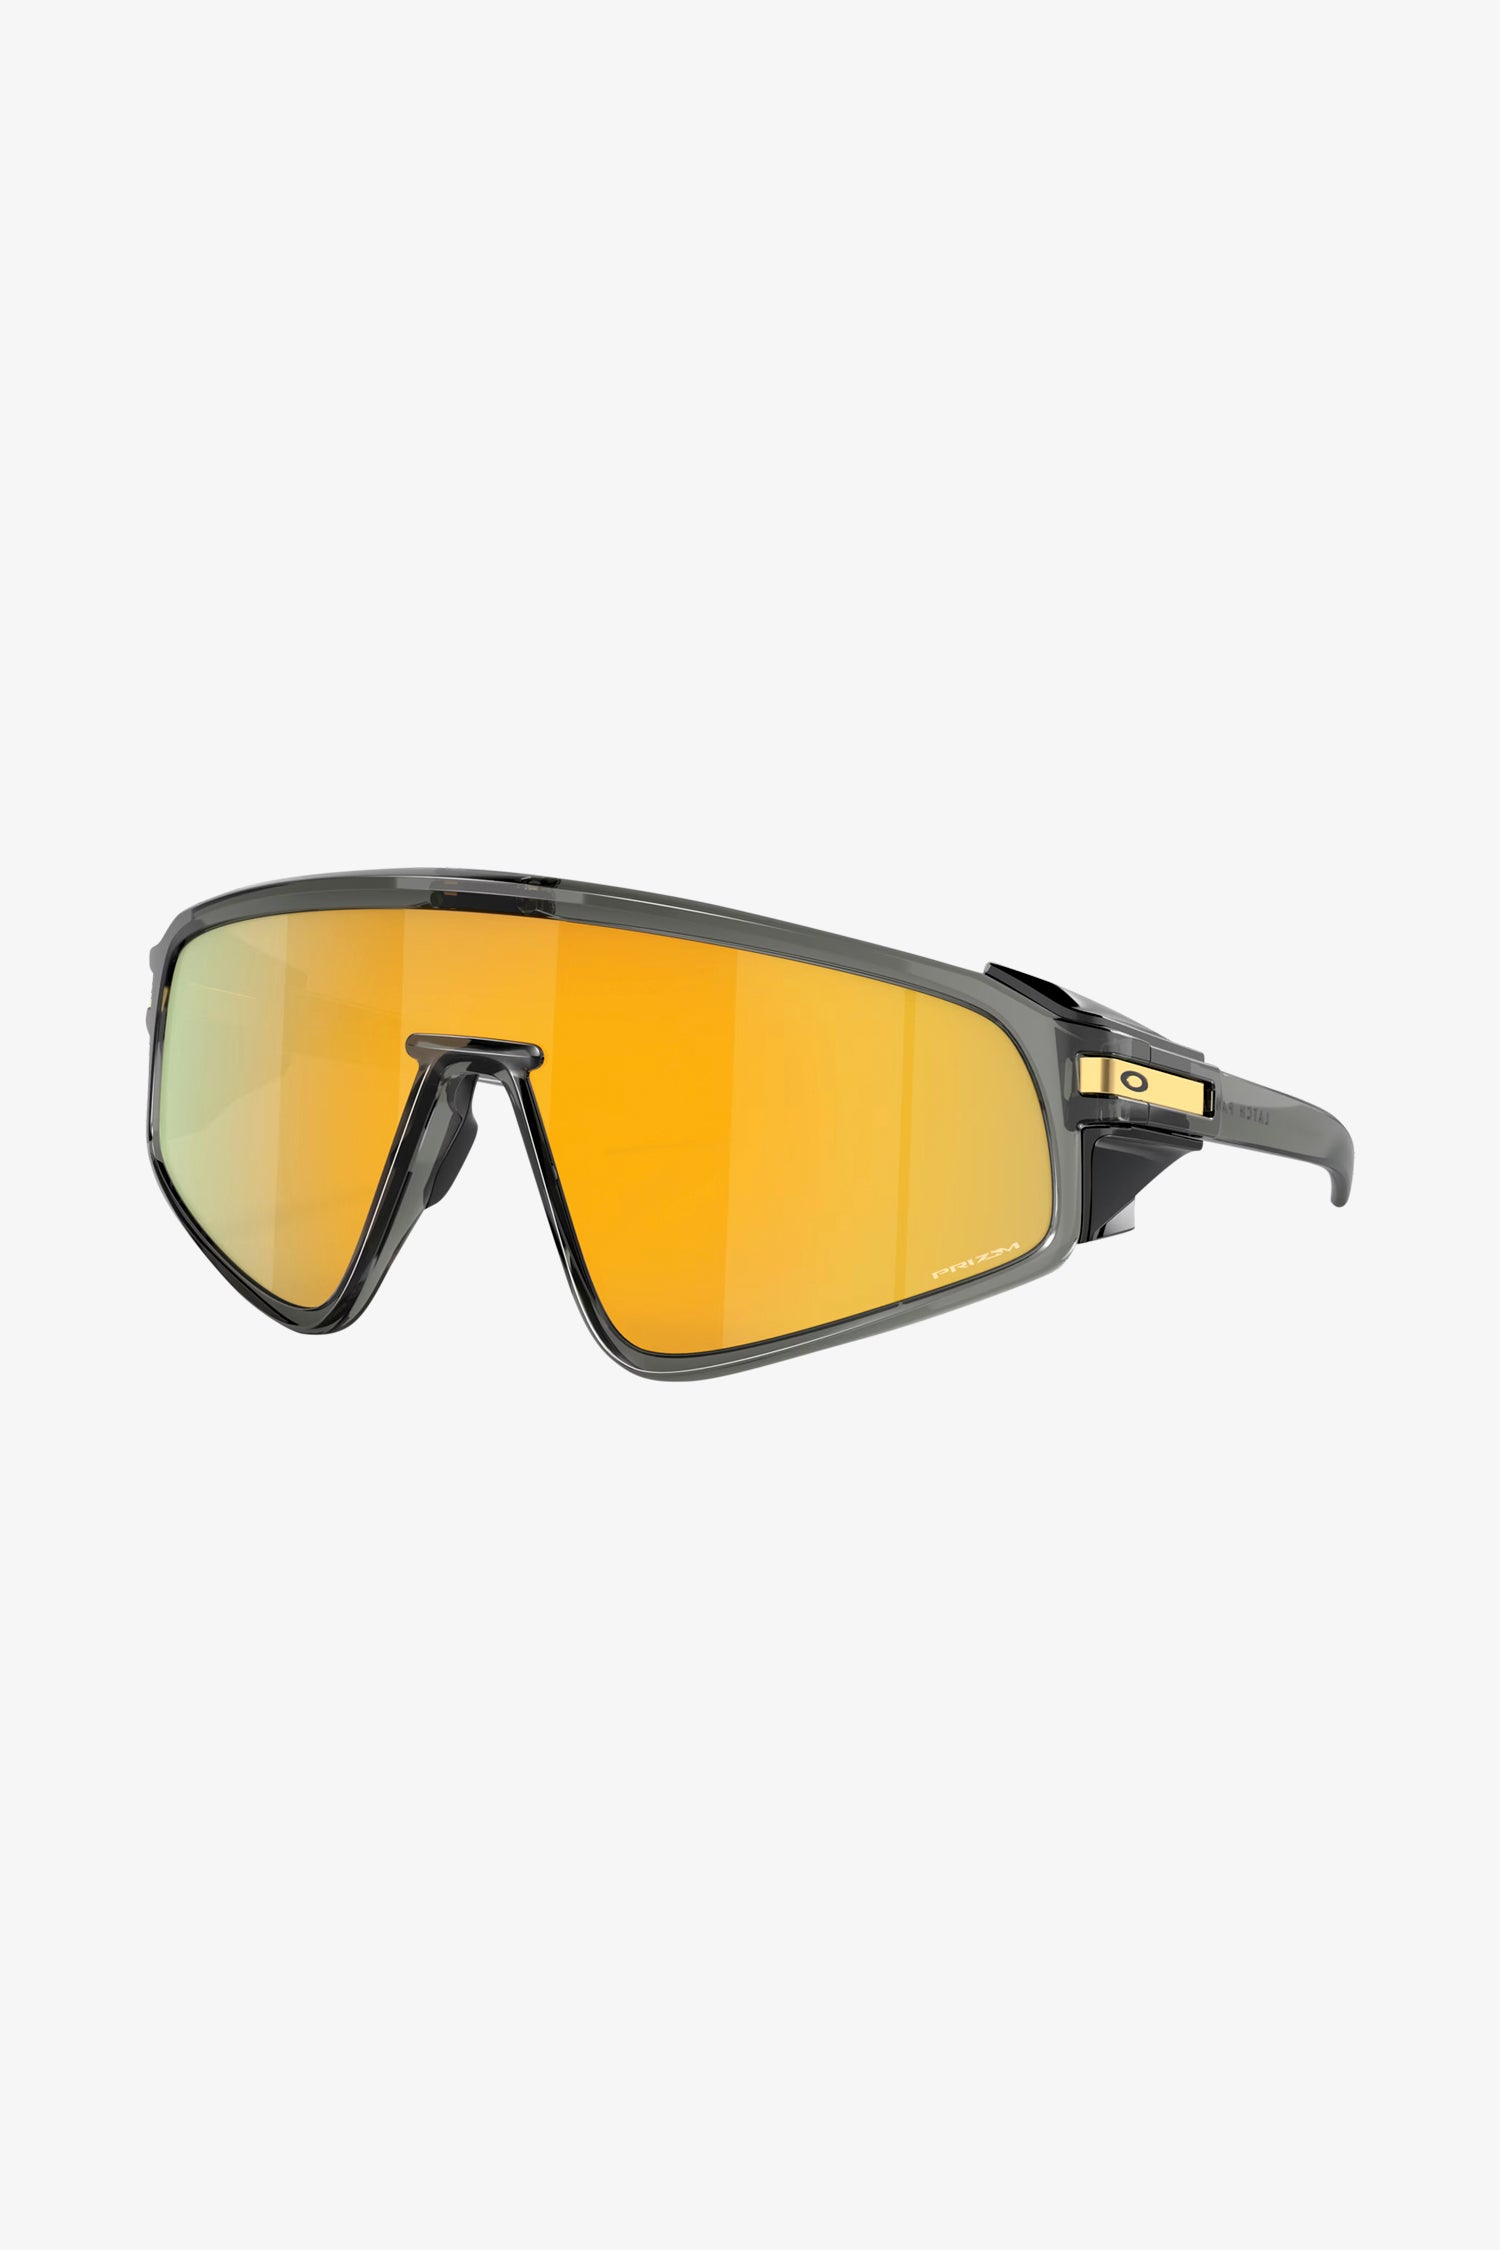 Latch Panel Sunglasses- Selectshop FRAME